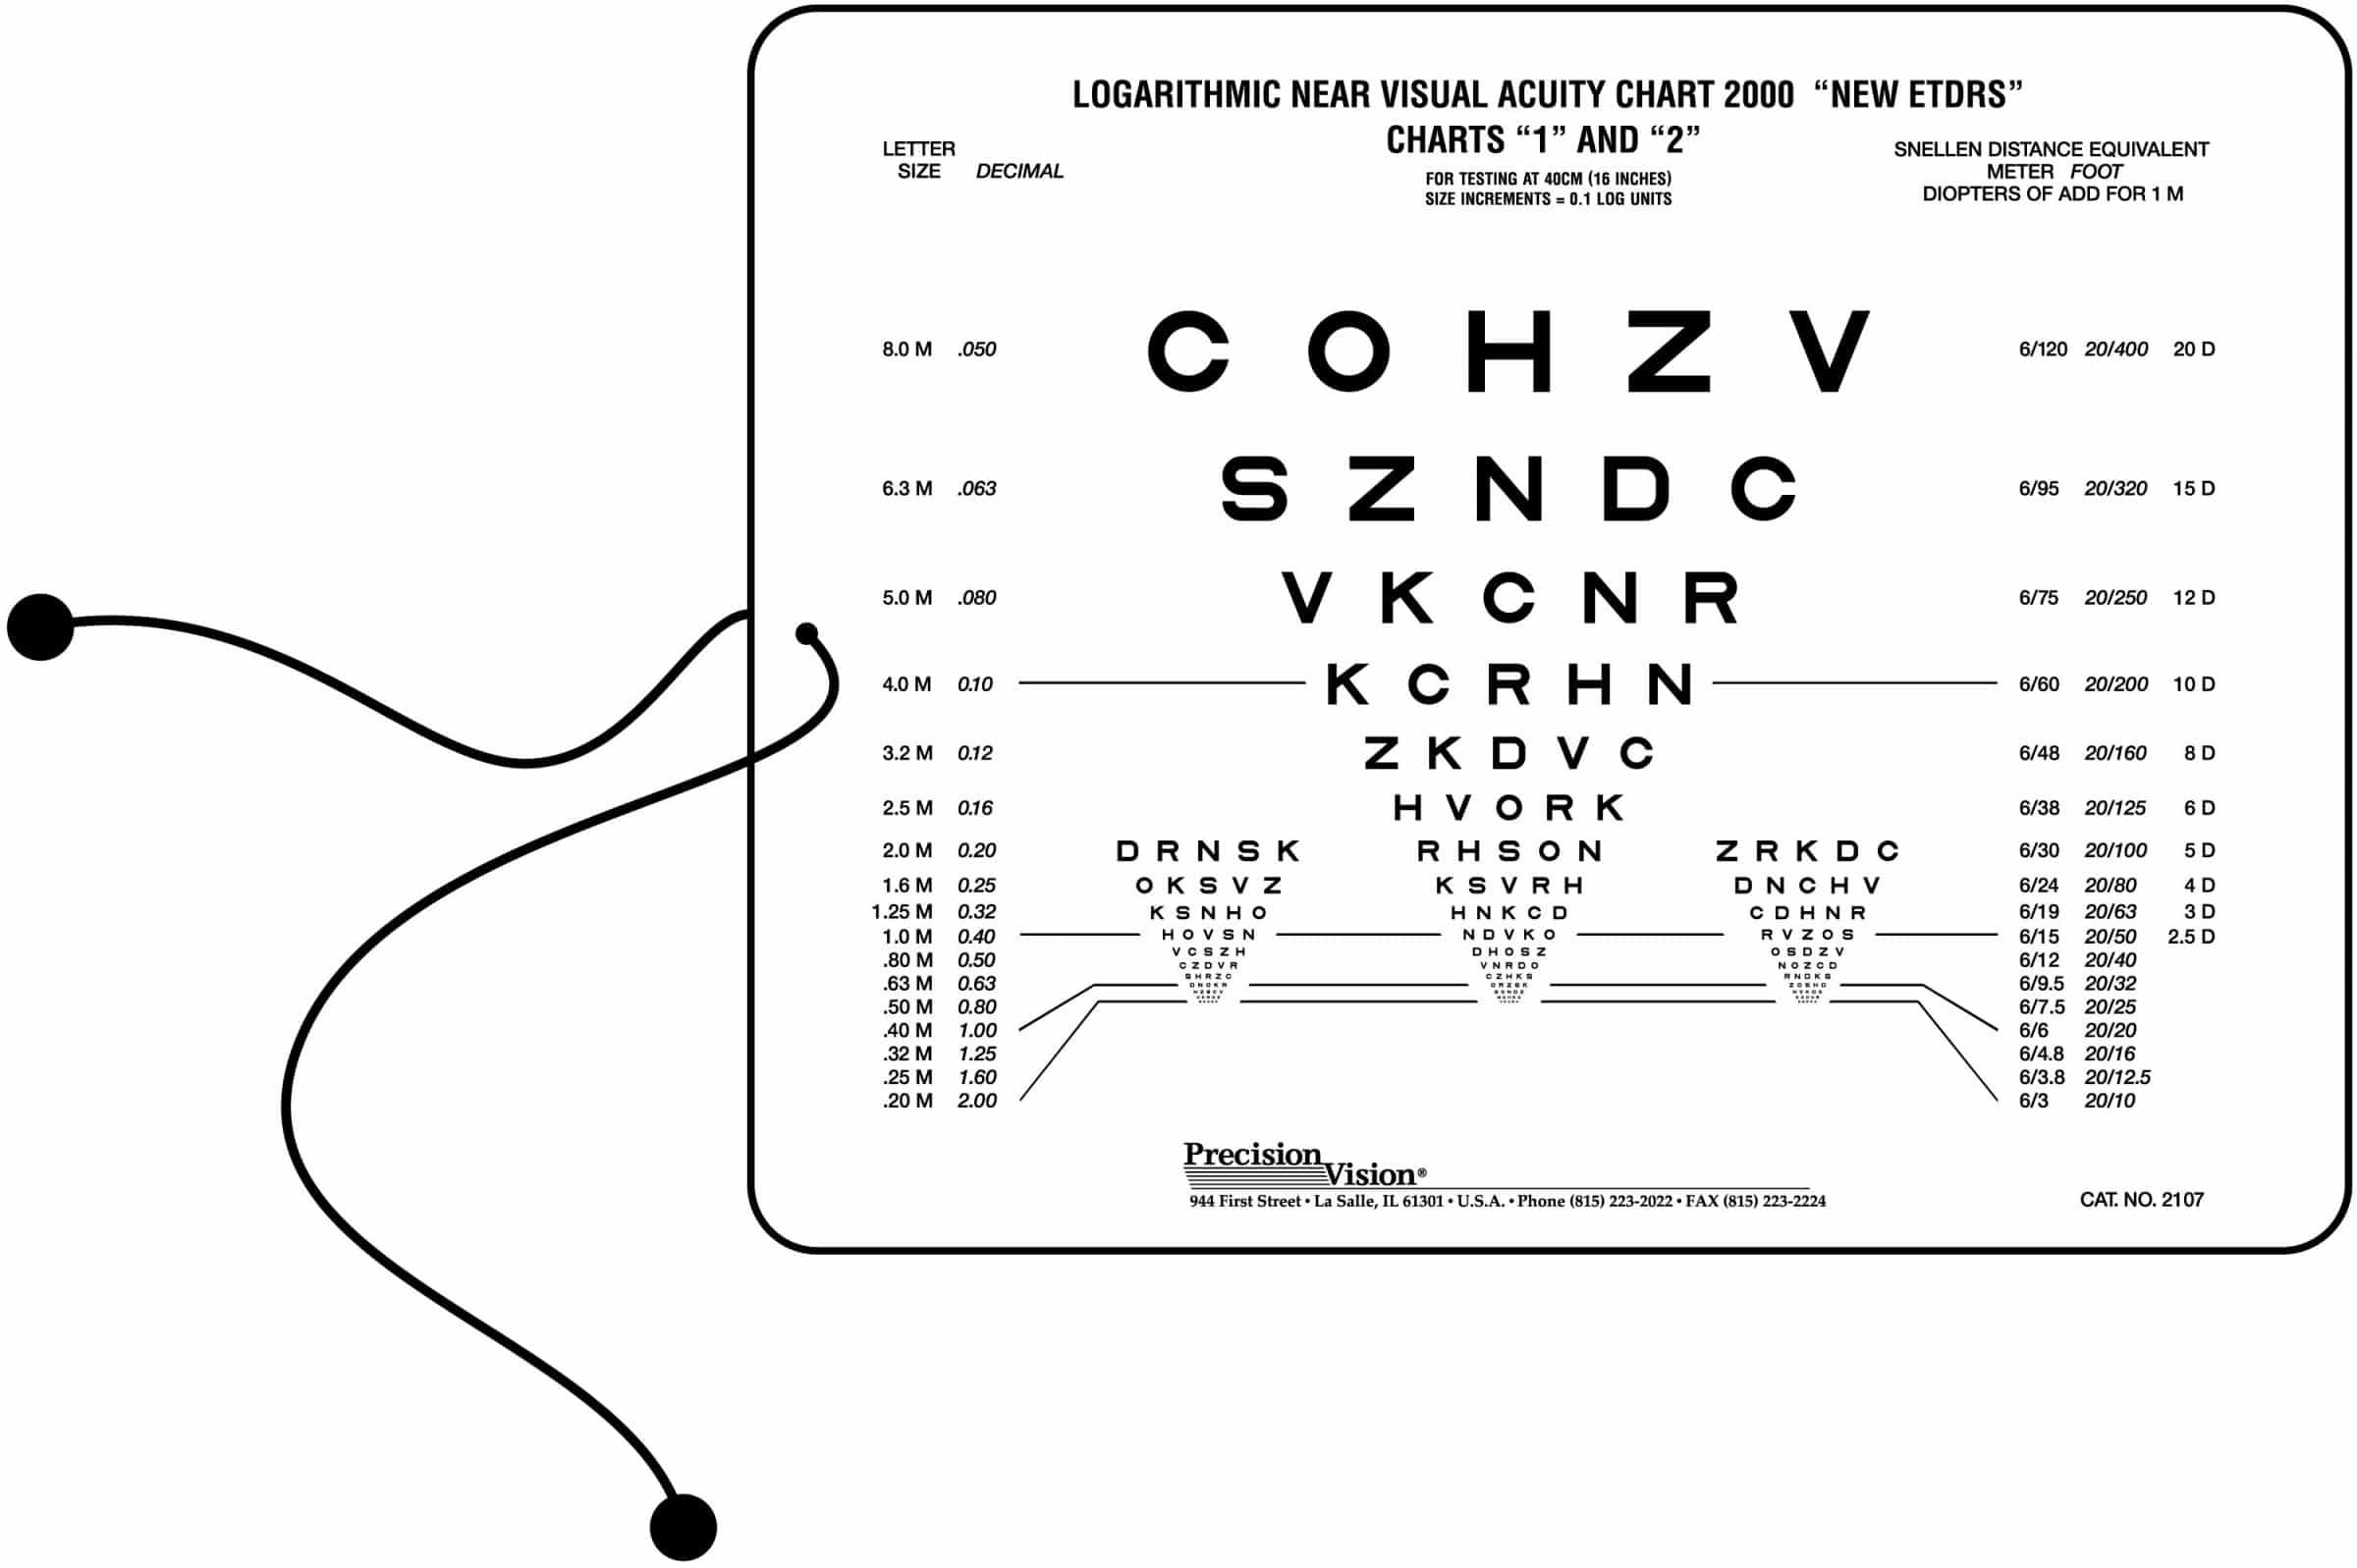 near-or-intermediate-sloan-vision-chart-precision-vision